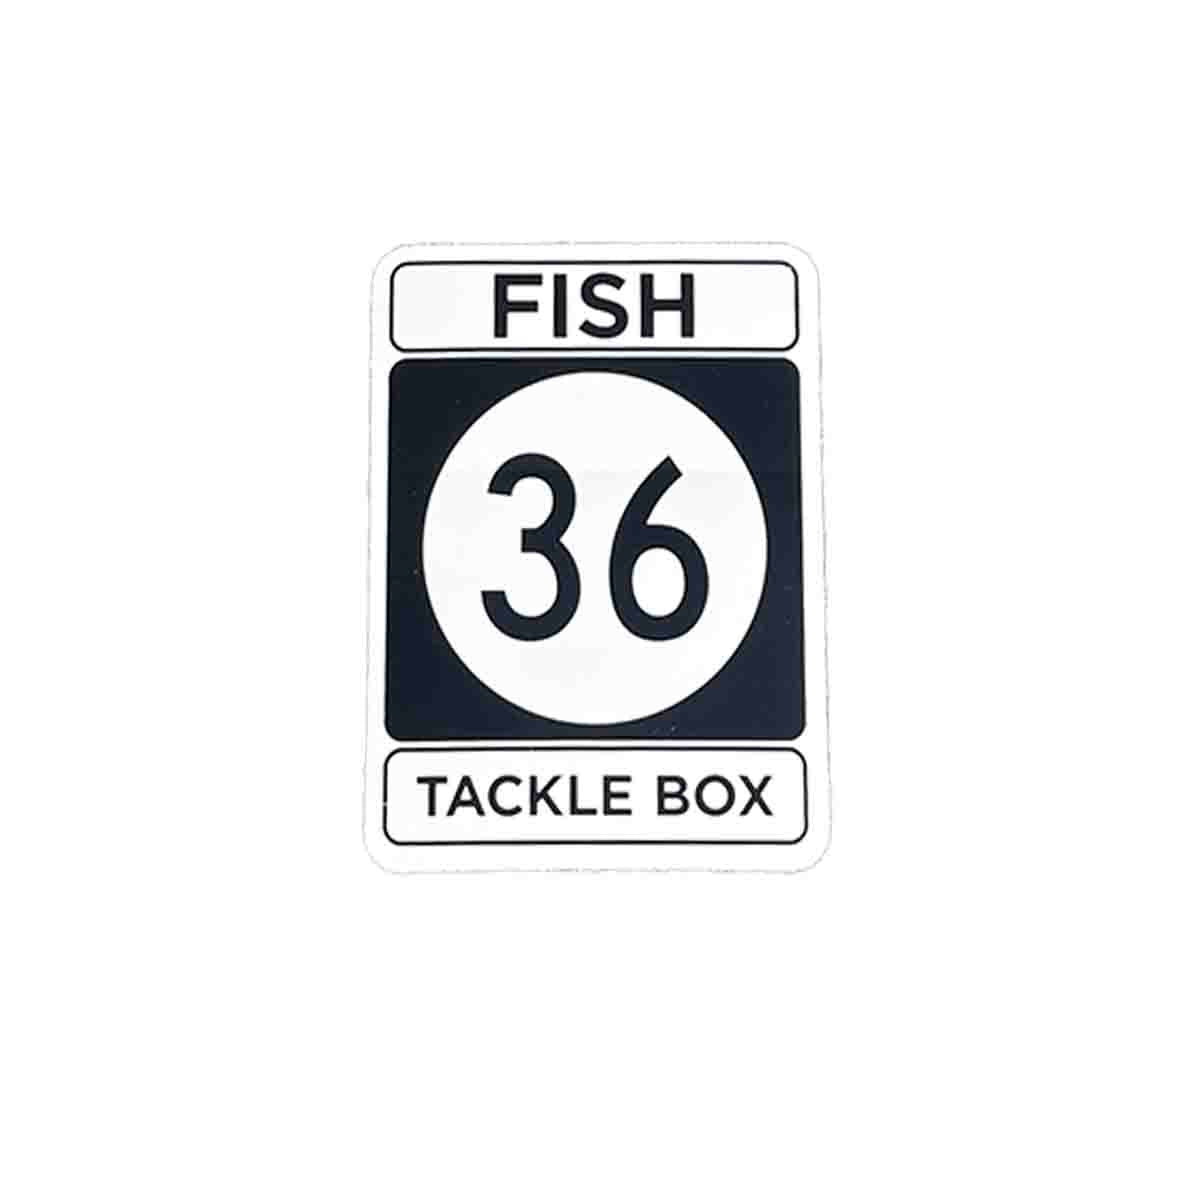 Tackle Box Sticker Fish 36